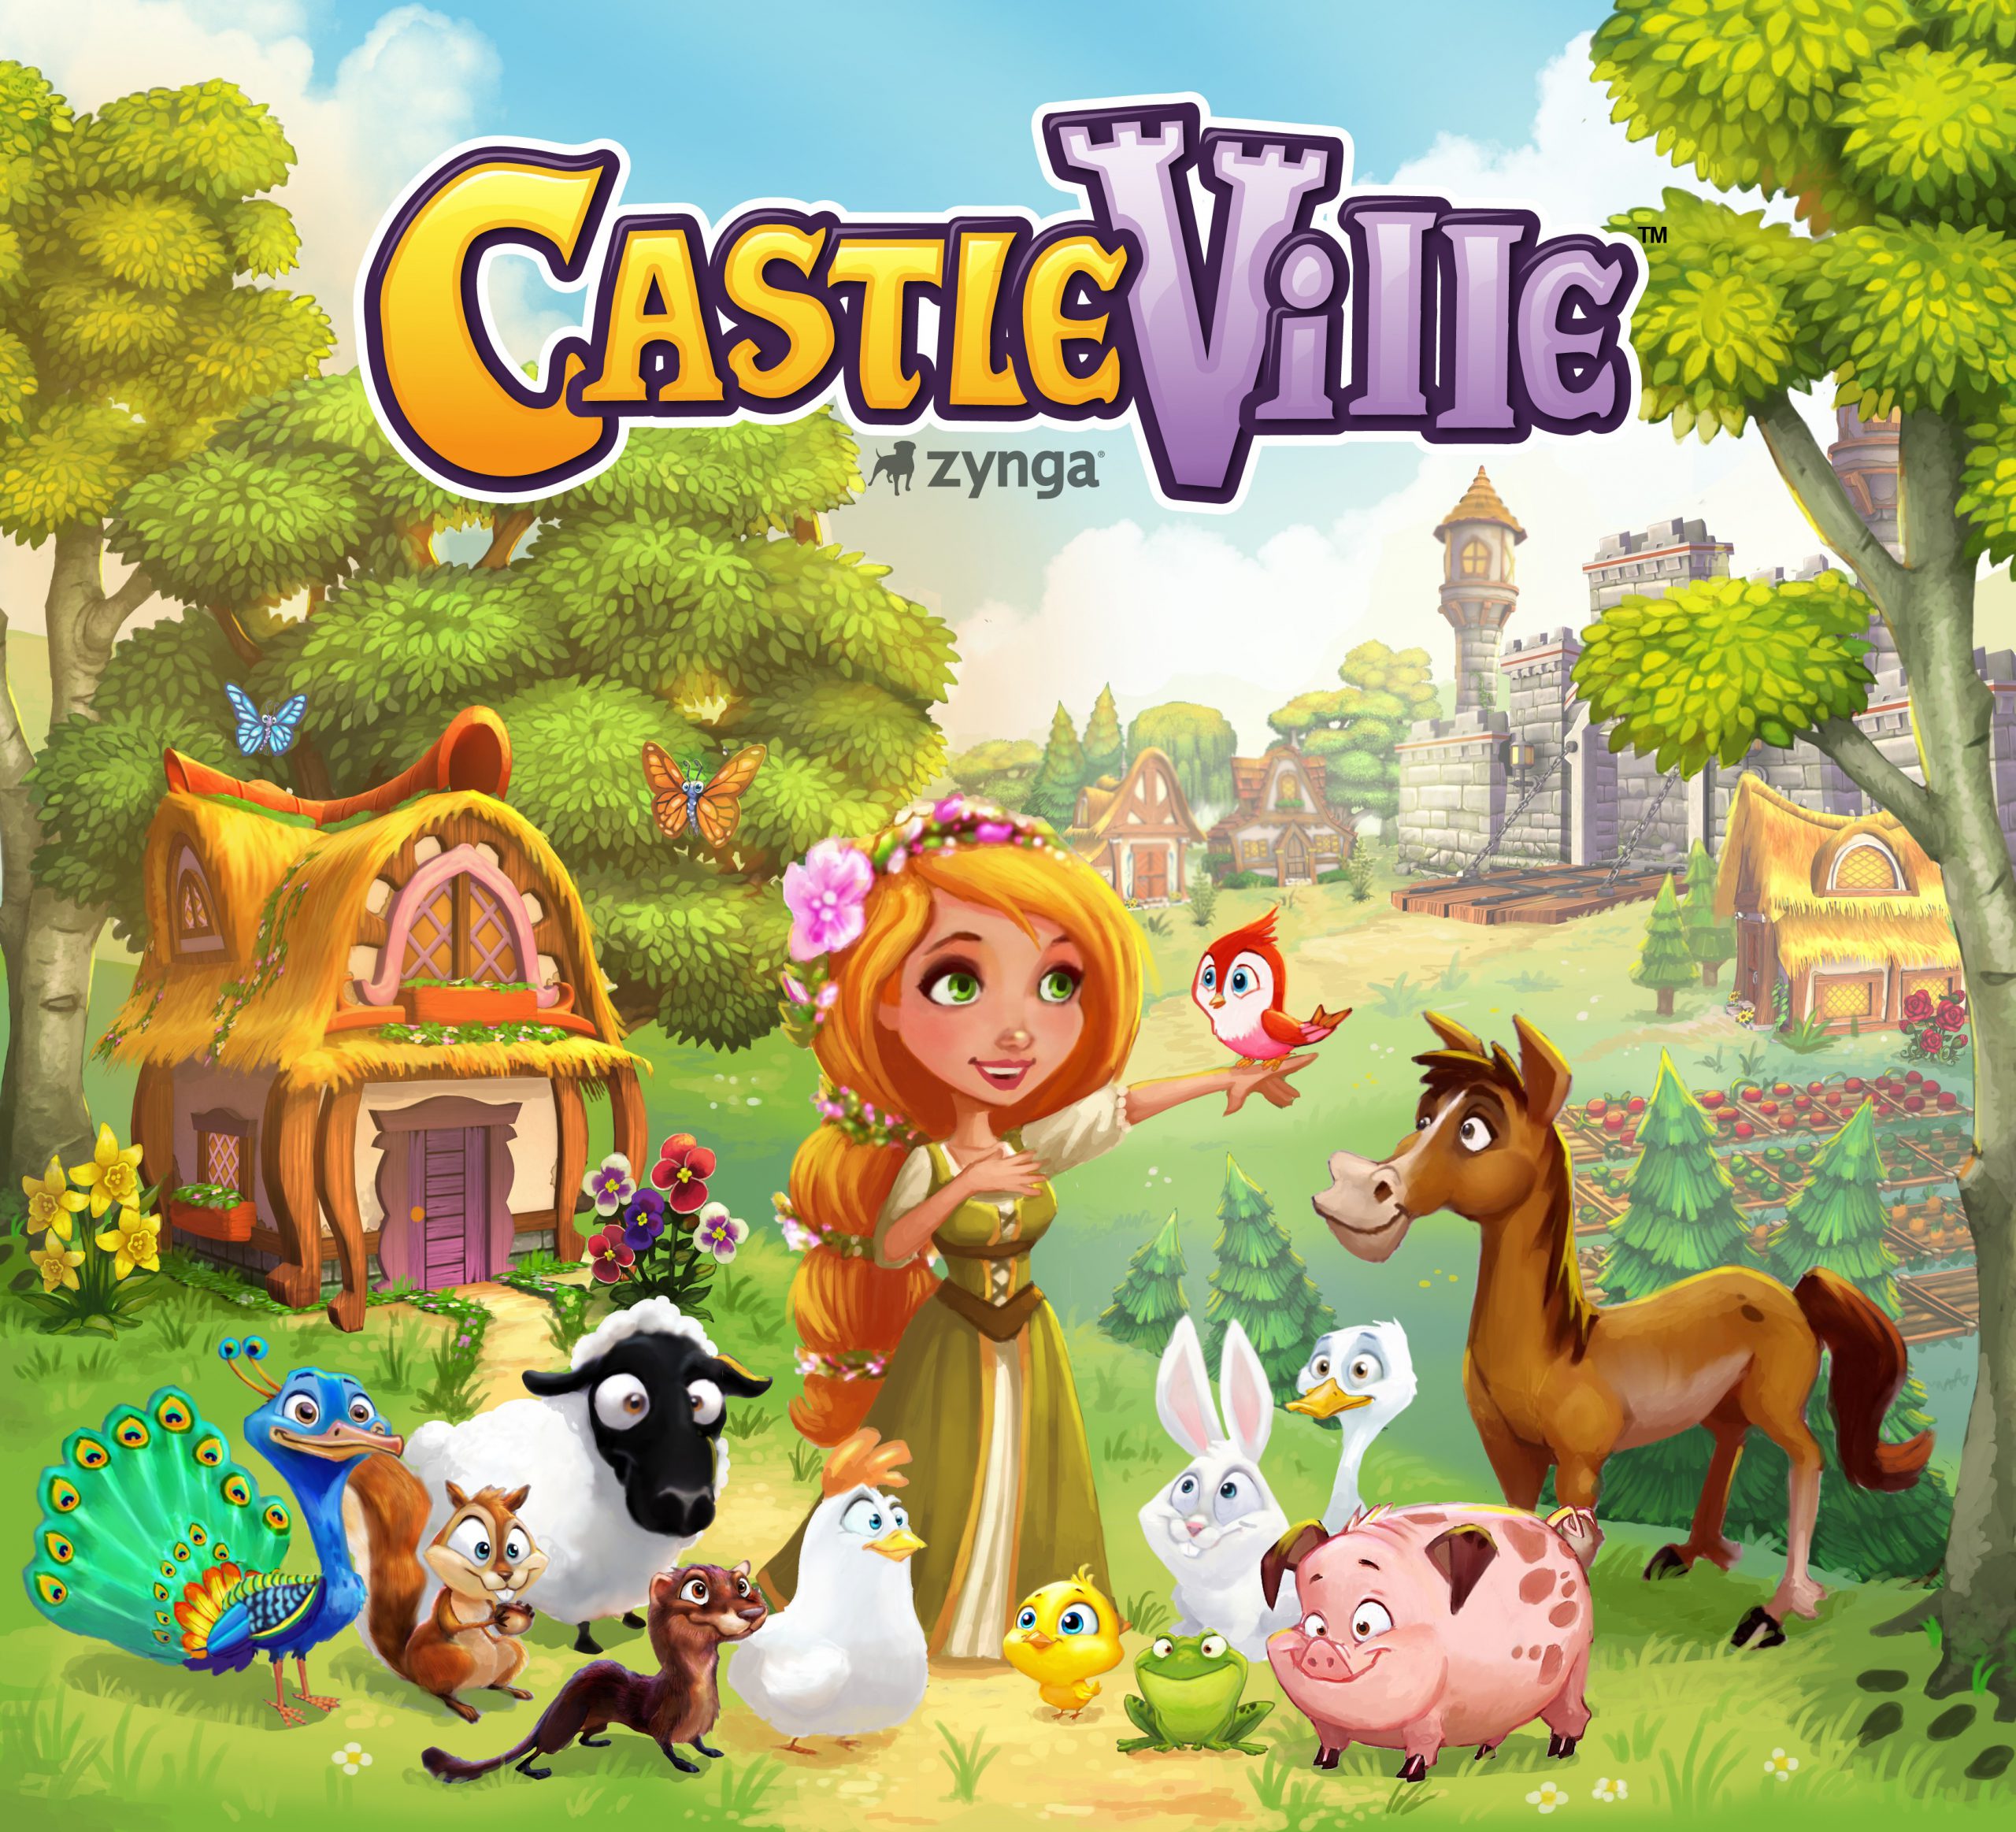 CastleVille moves past five million daily players